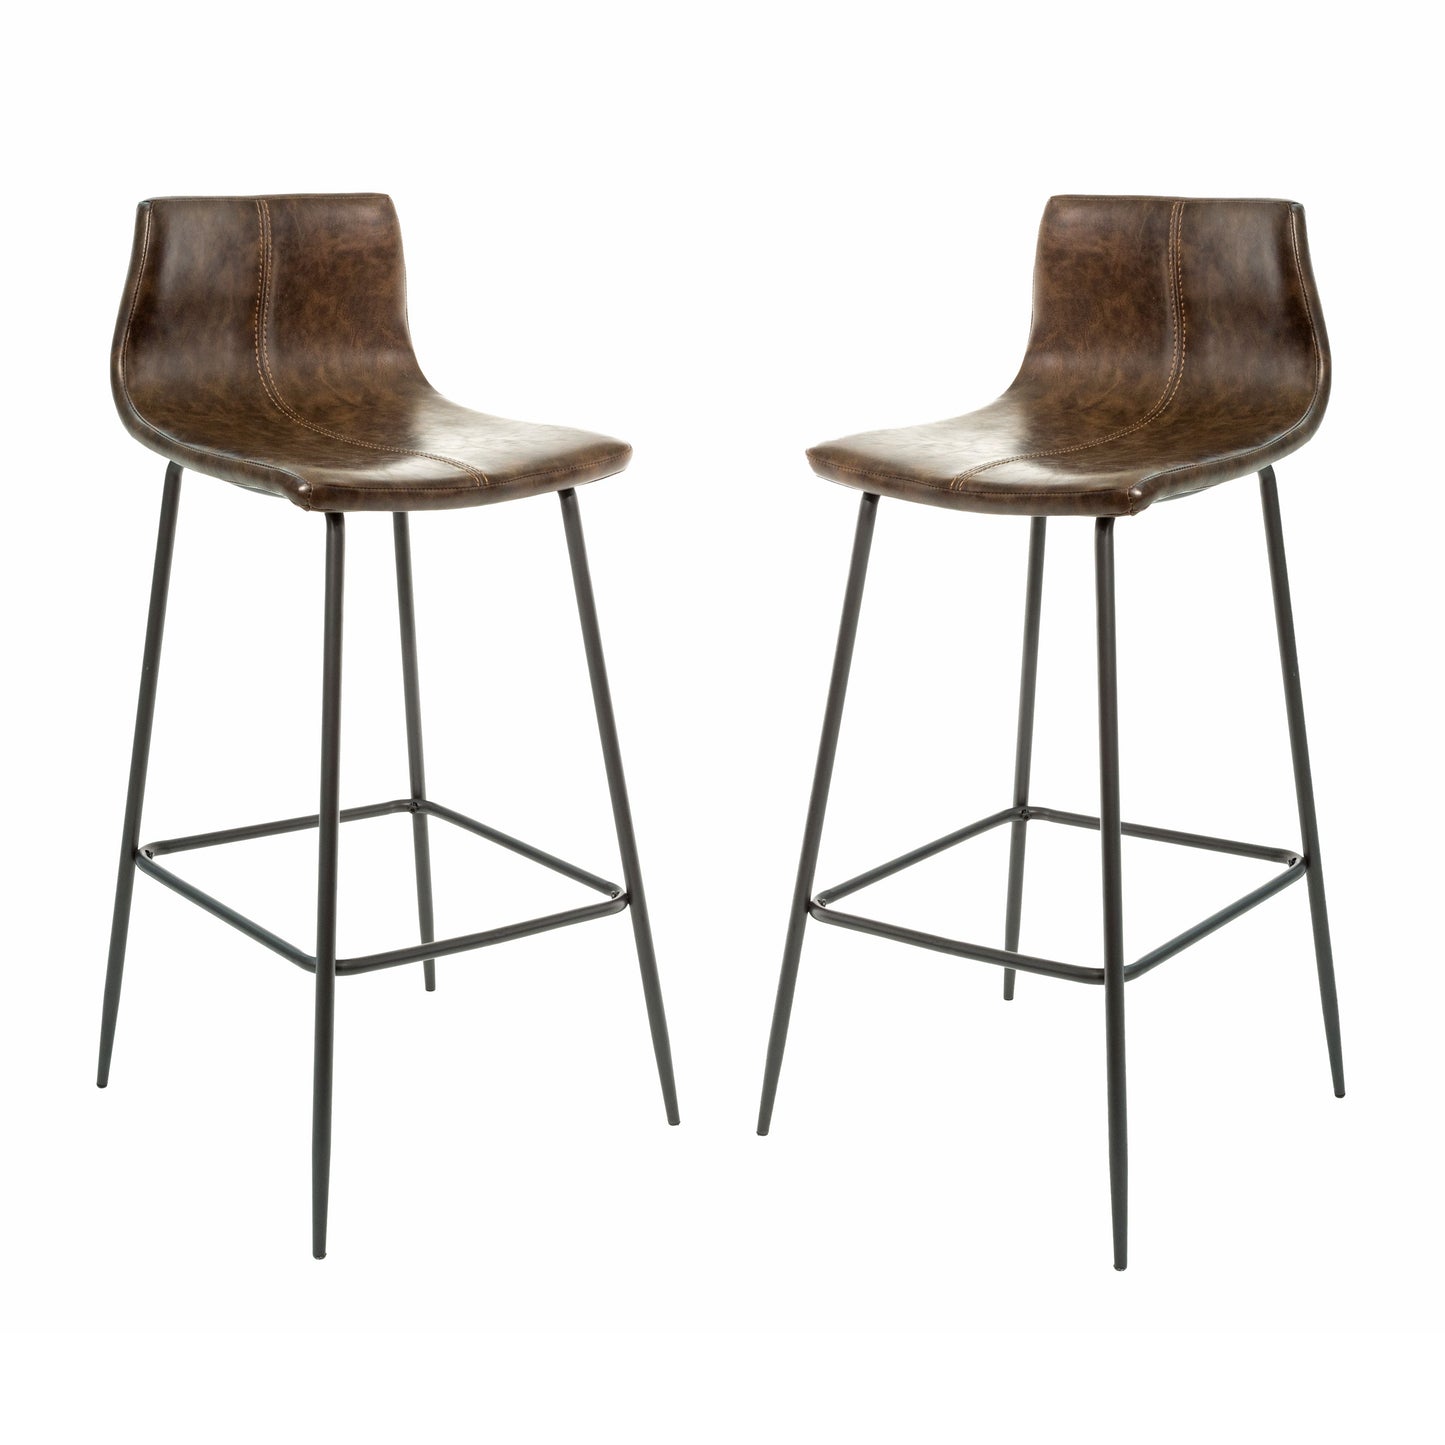 Pair of chestnut brown Barracuda bar stools